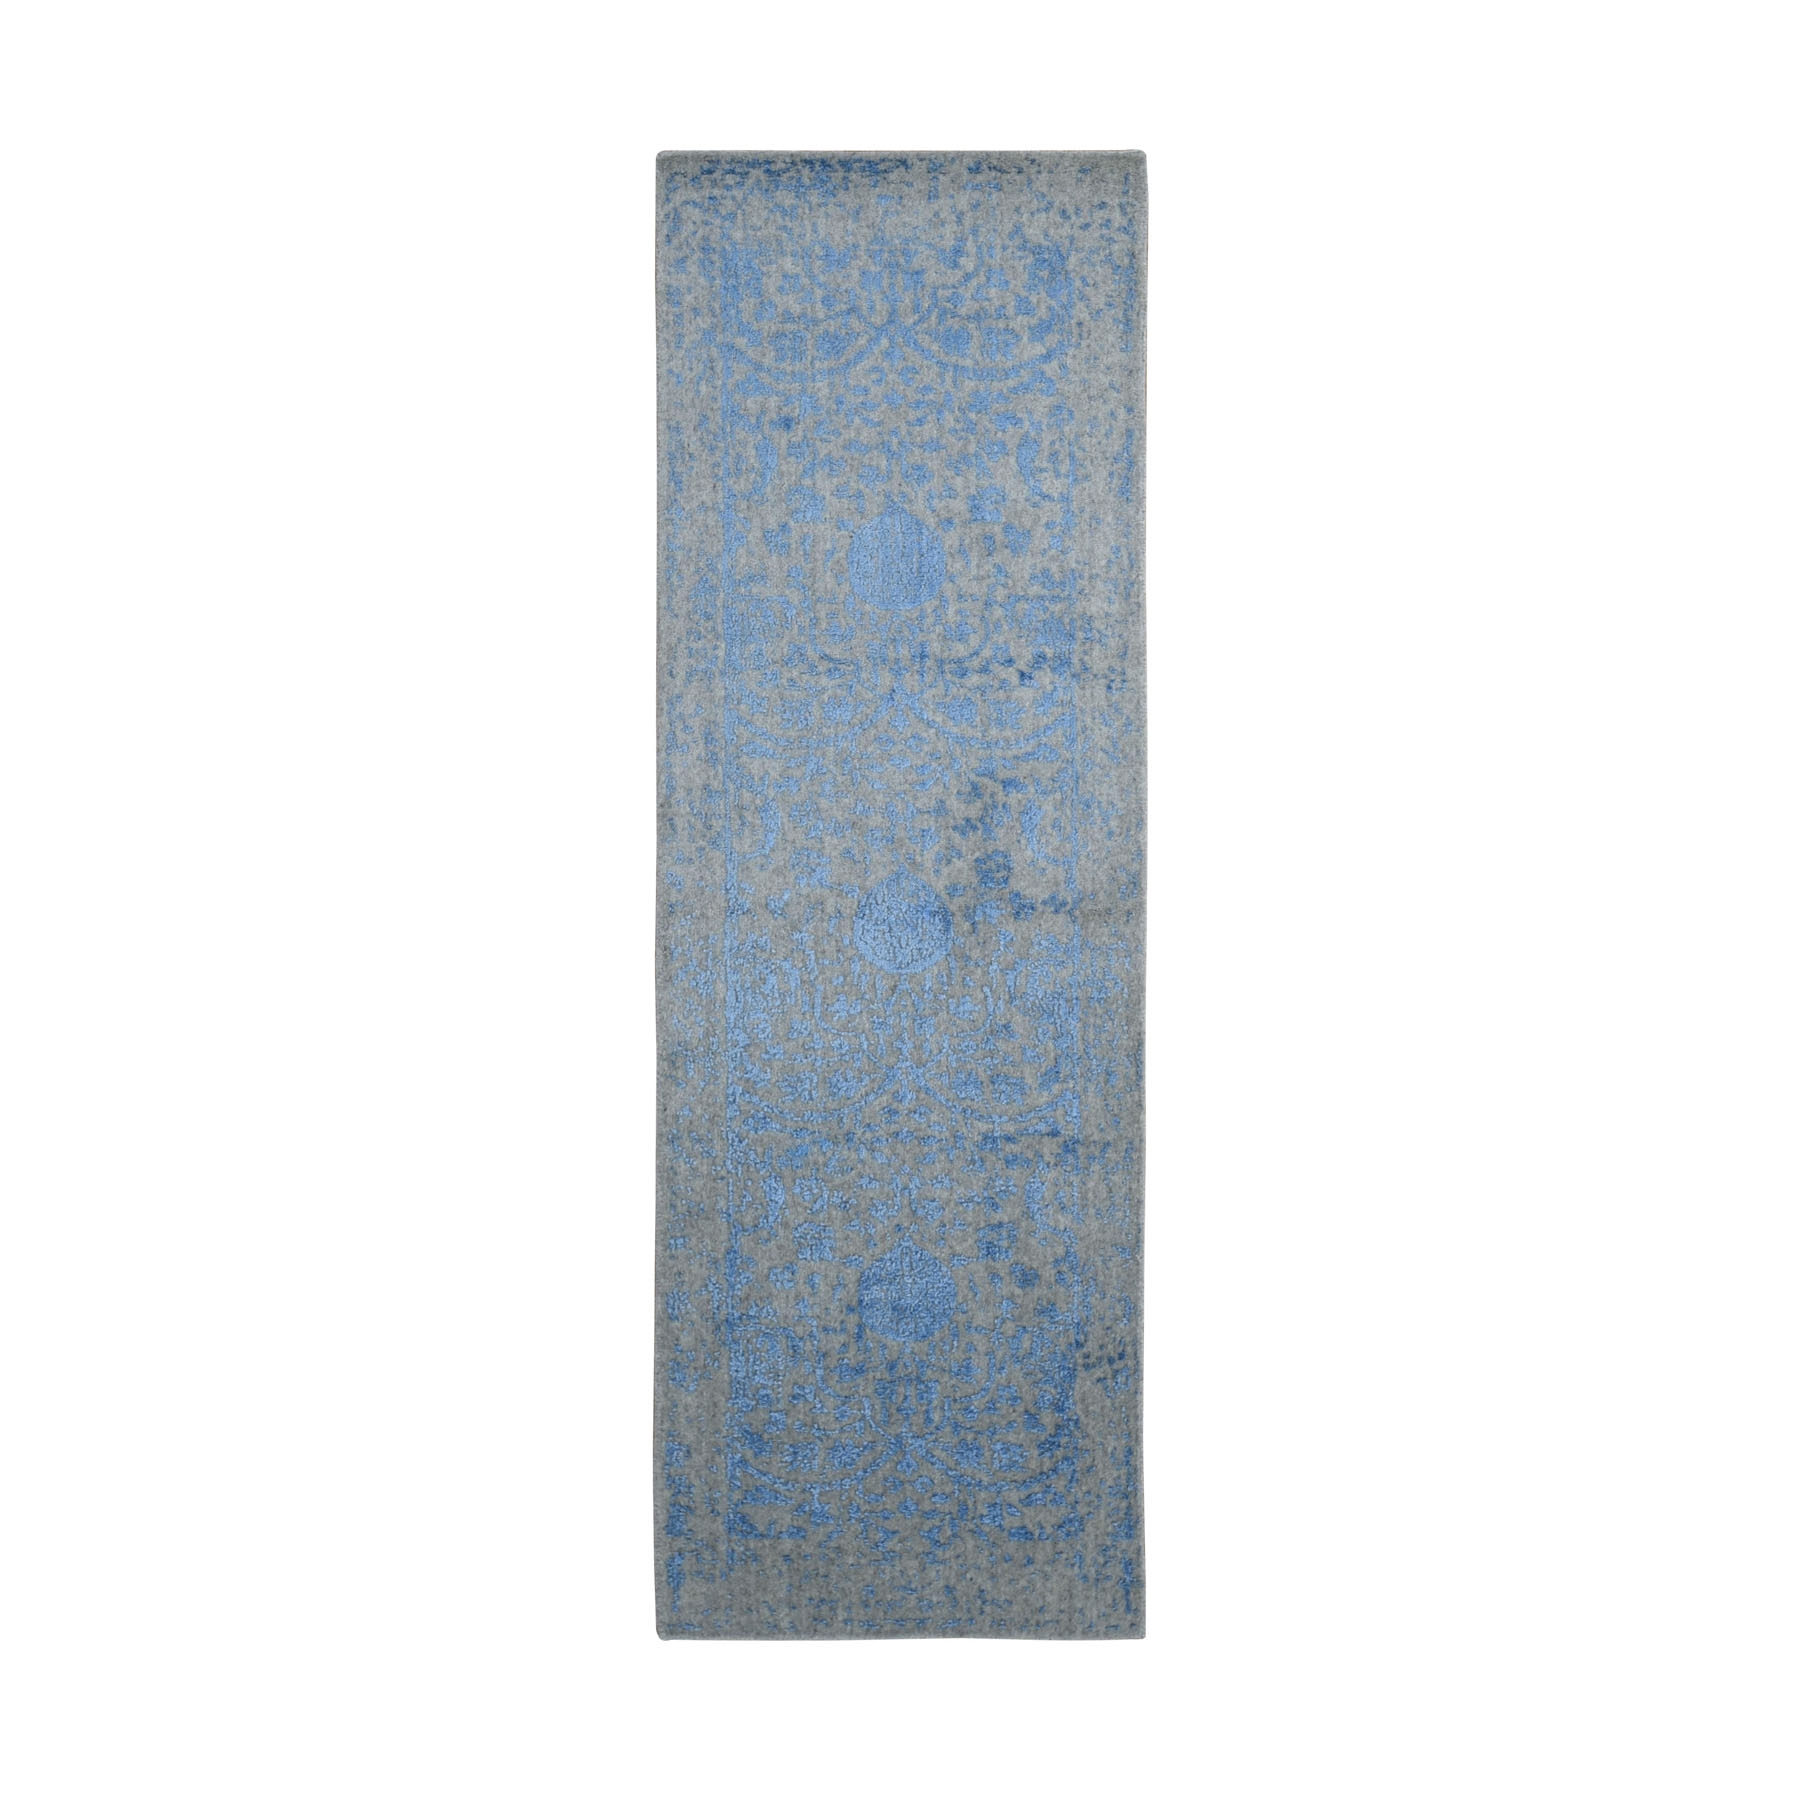 2'5"X7'9" Blue Jacquard Hand Loomed Wool And Art Silk Pomegranate Design Runner Oriental Rug moad9a7b